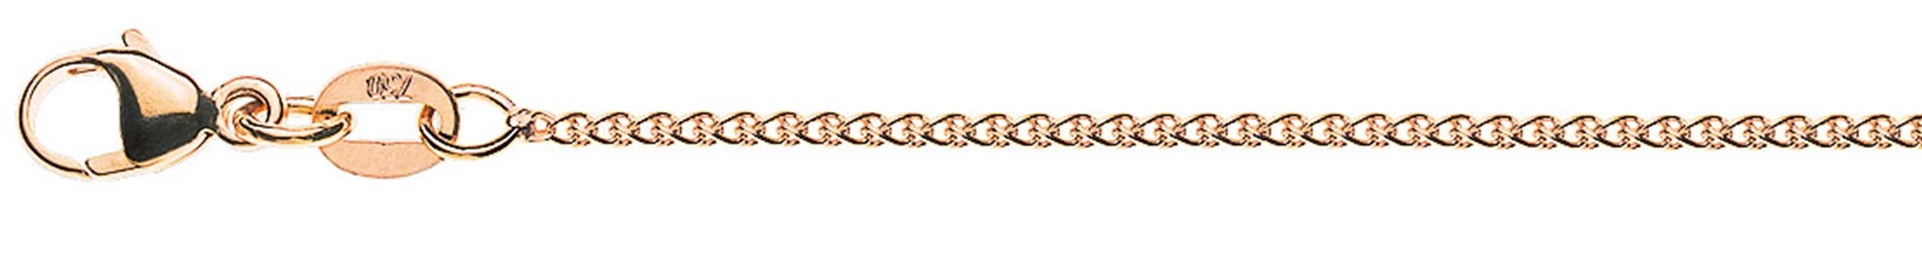 AURONOS Prestige Rose gold necklace 18K rose gold cable chain 38cm 1.2mm